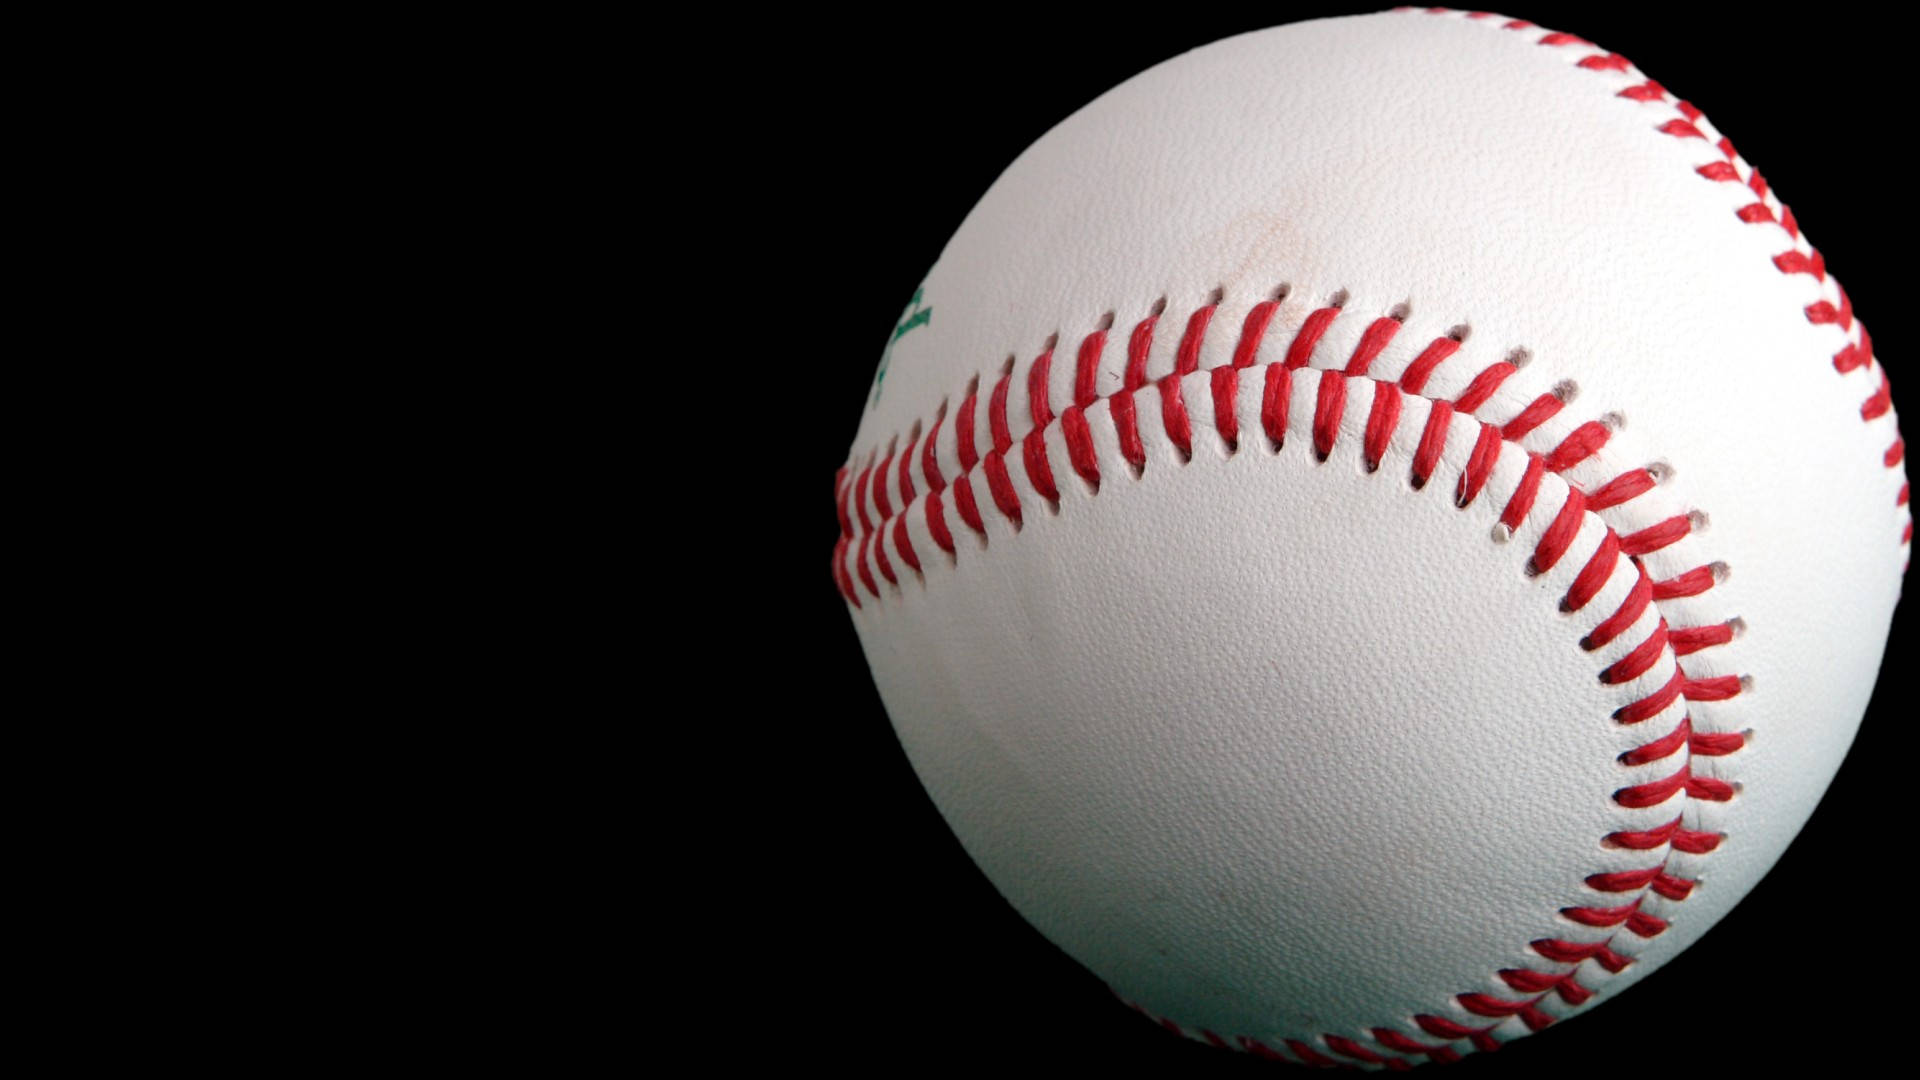 Cool Baseball Ball Close-up Background